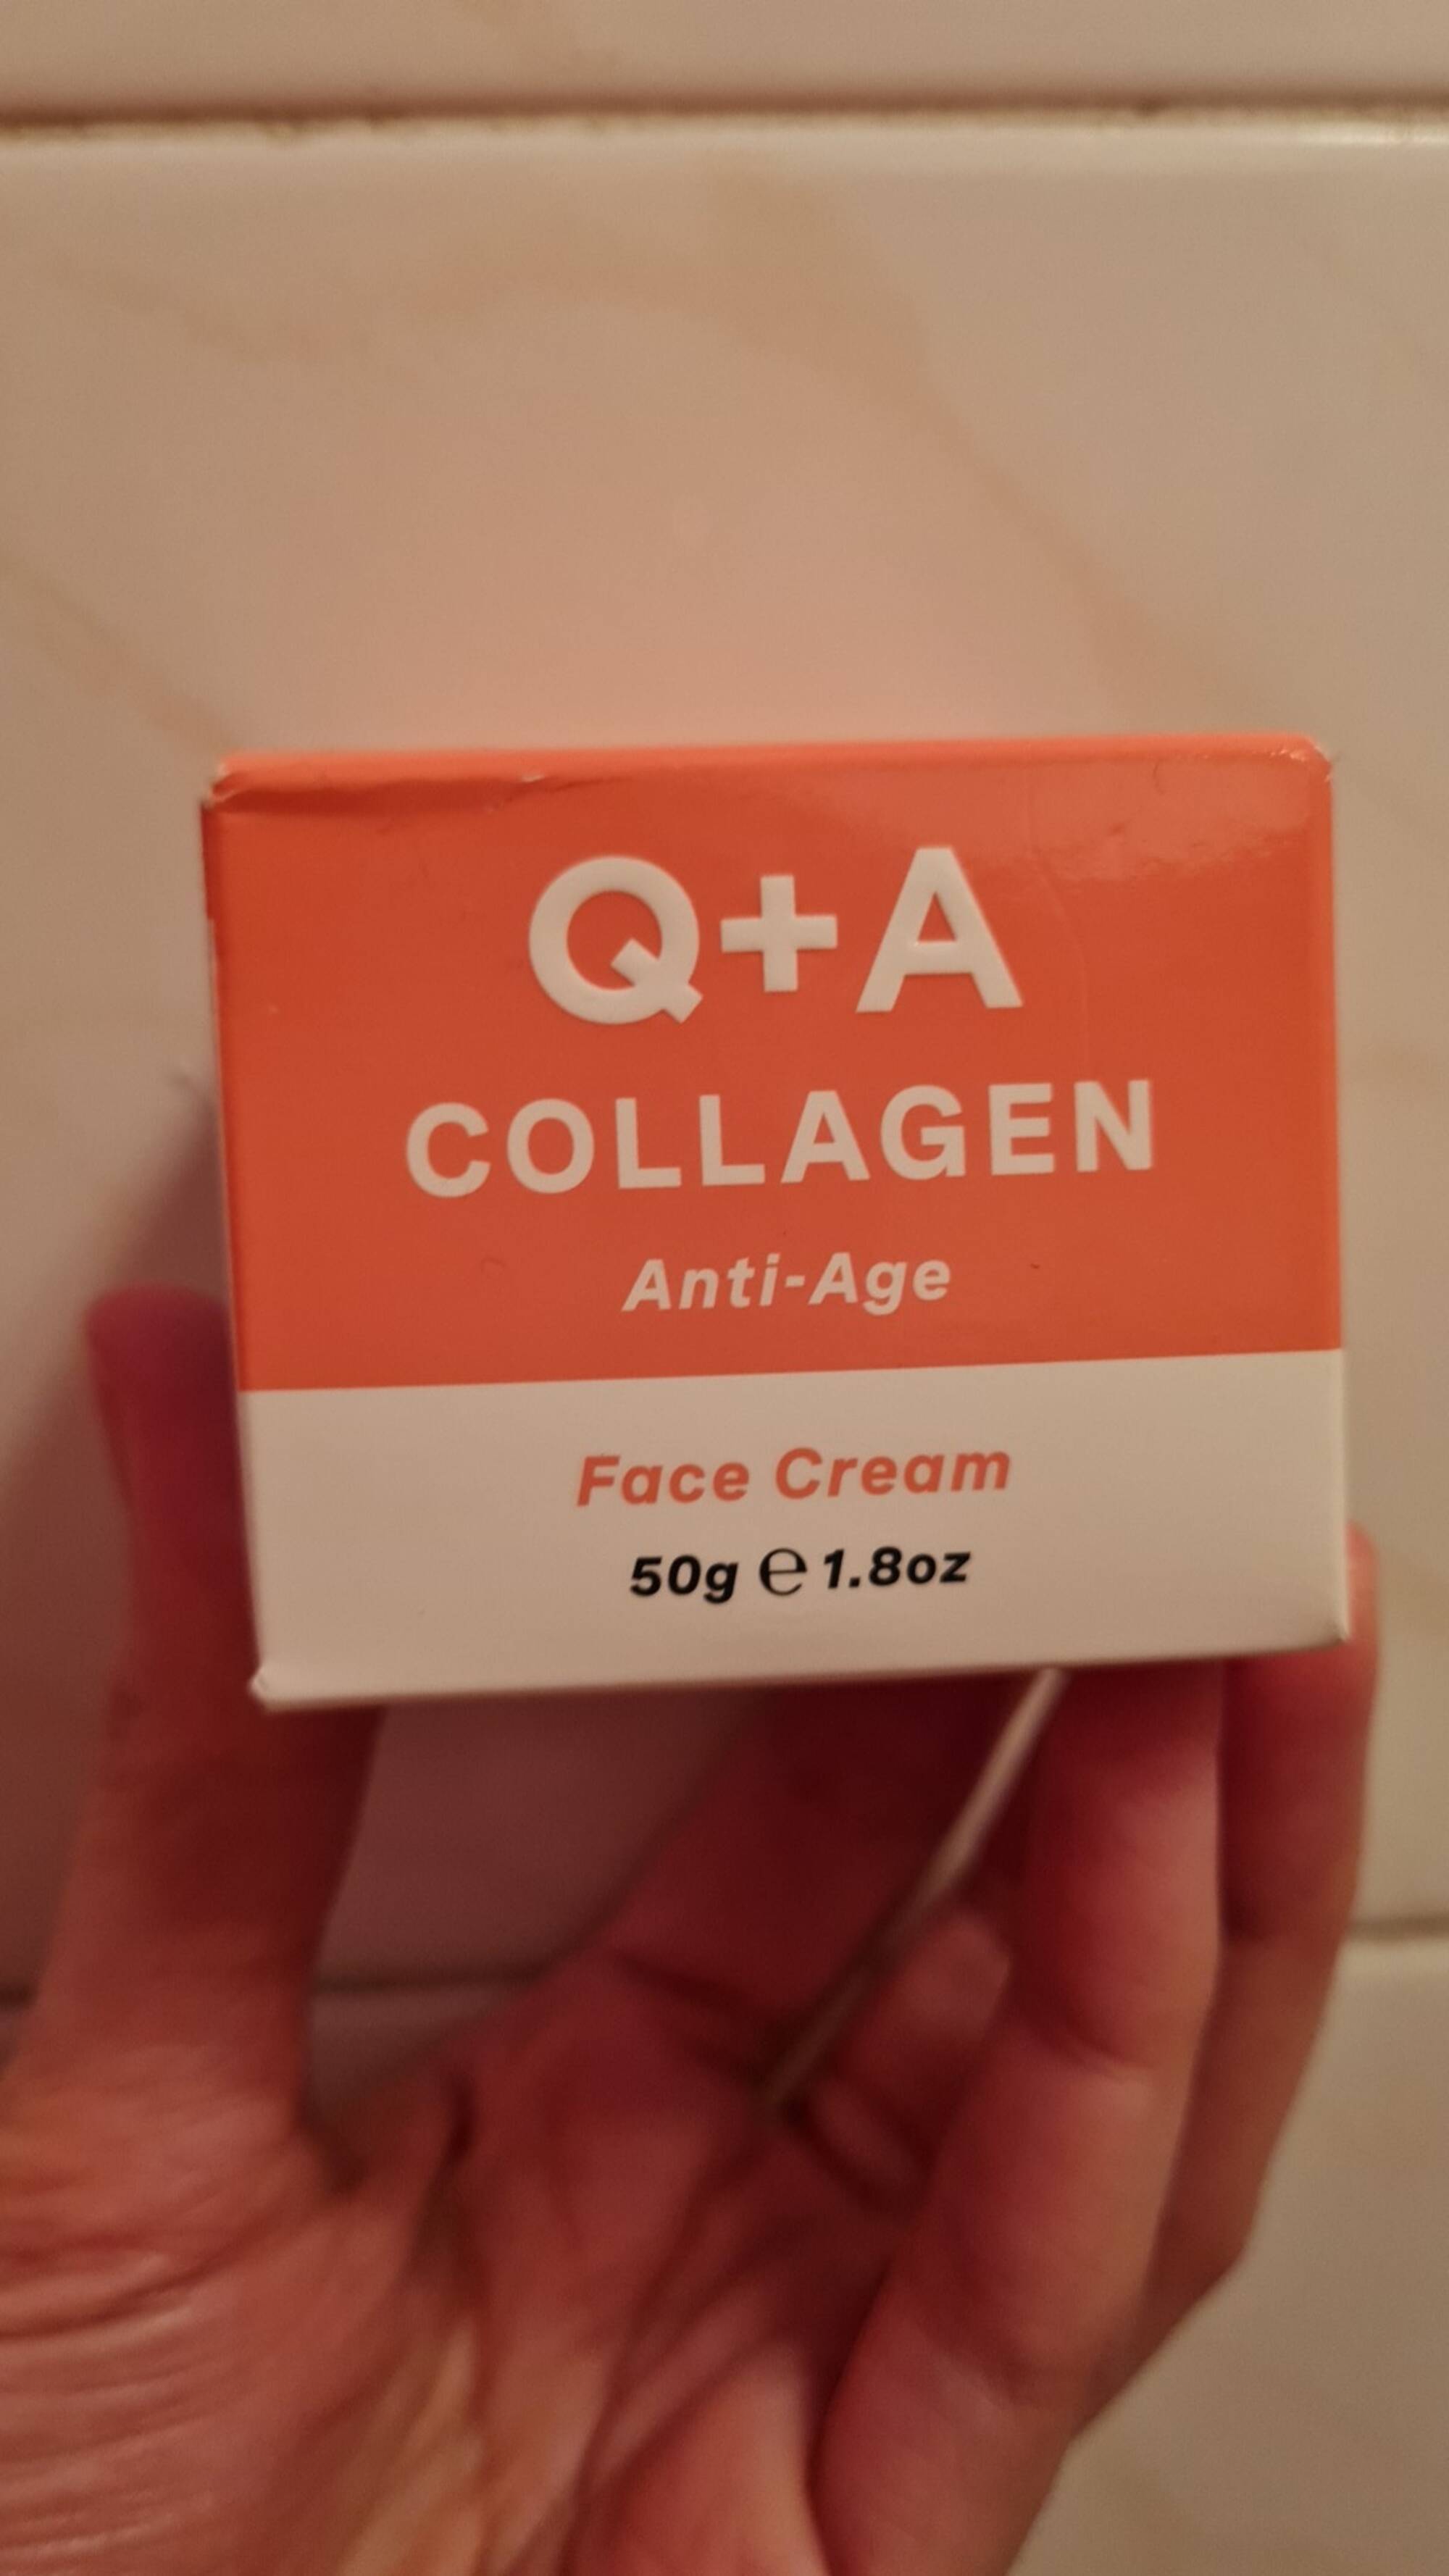 Q+A - COllagen - Face cream